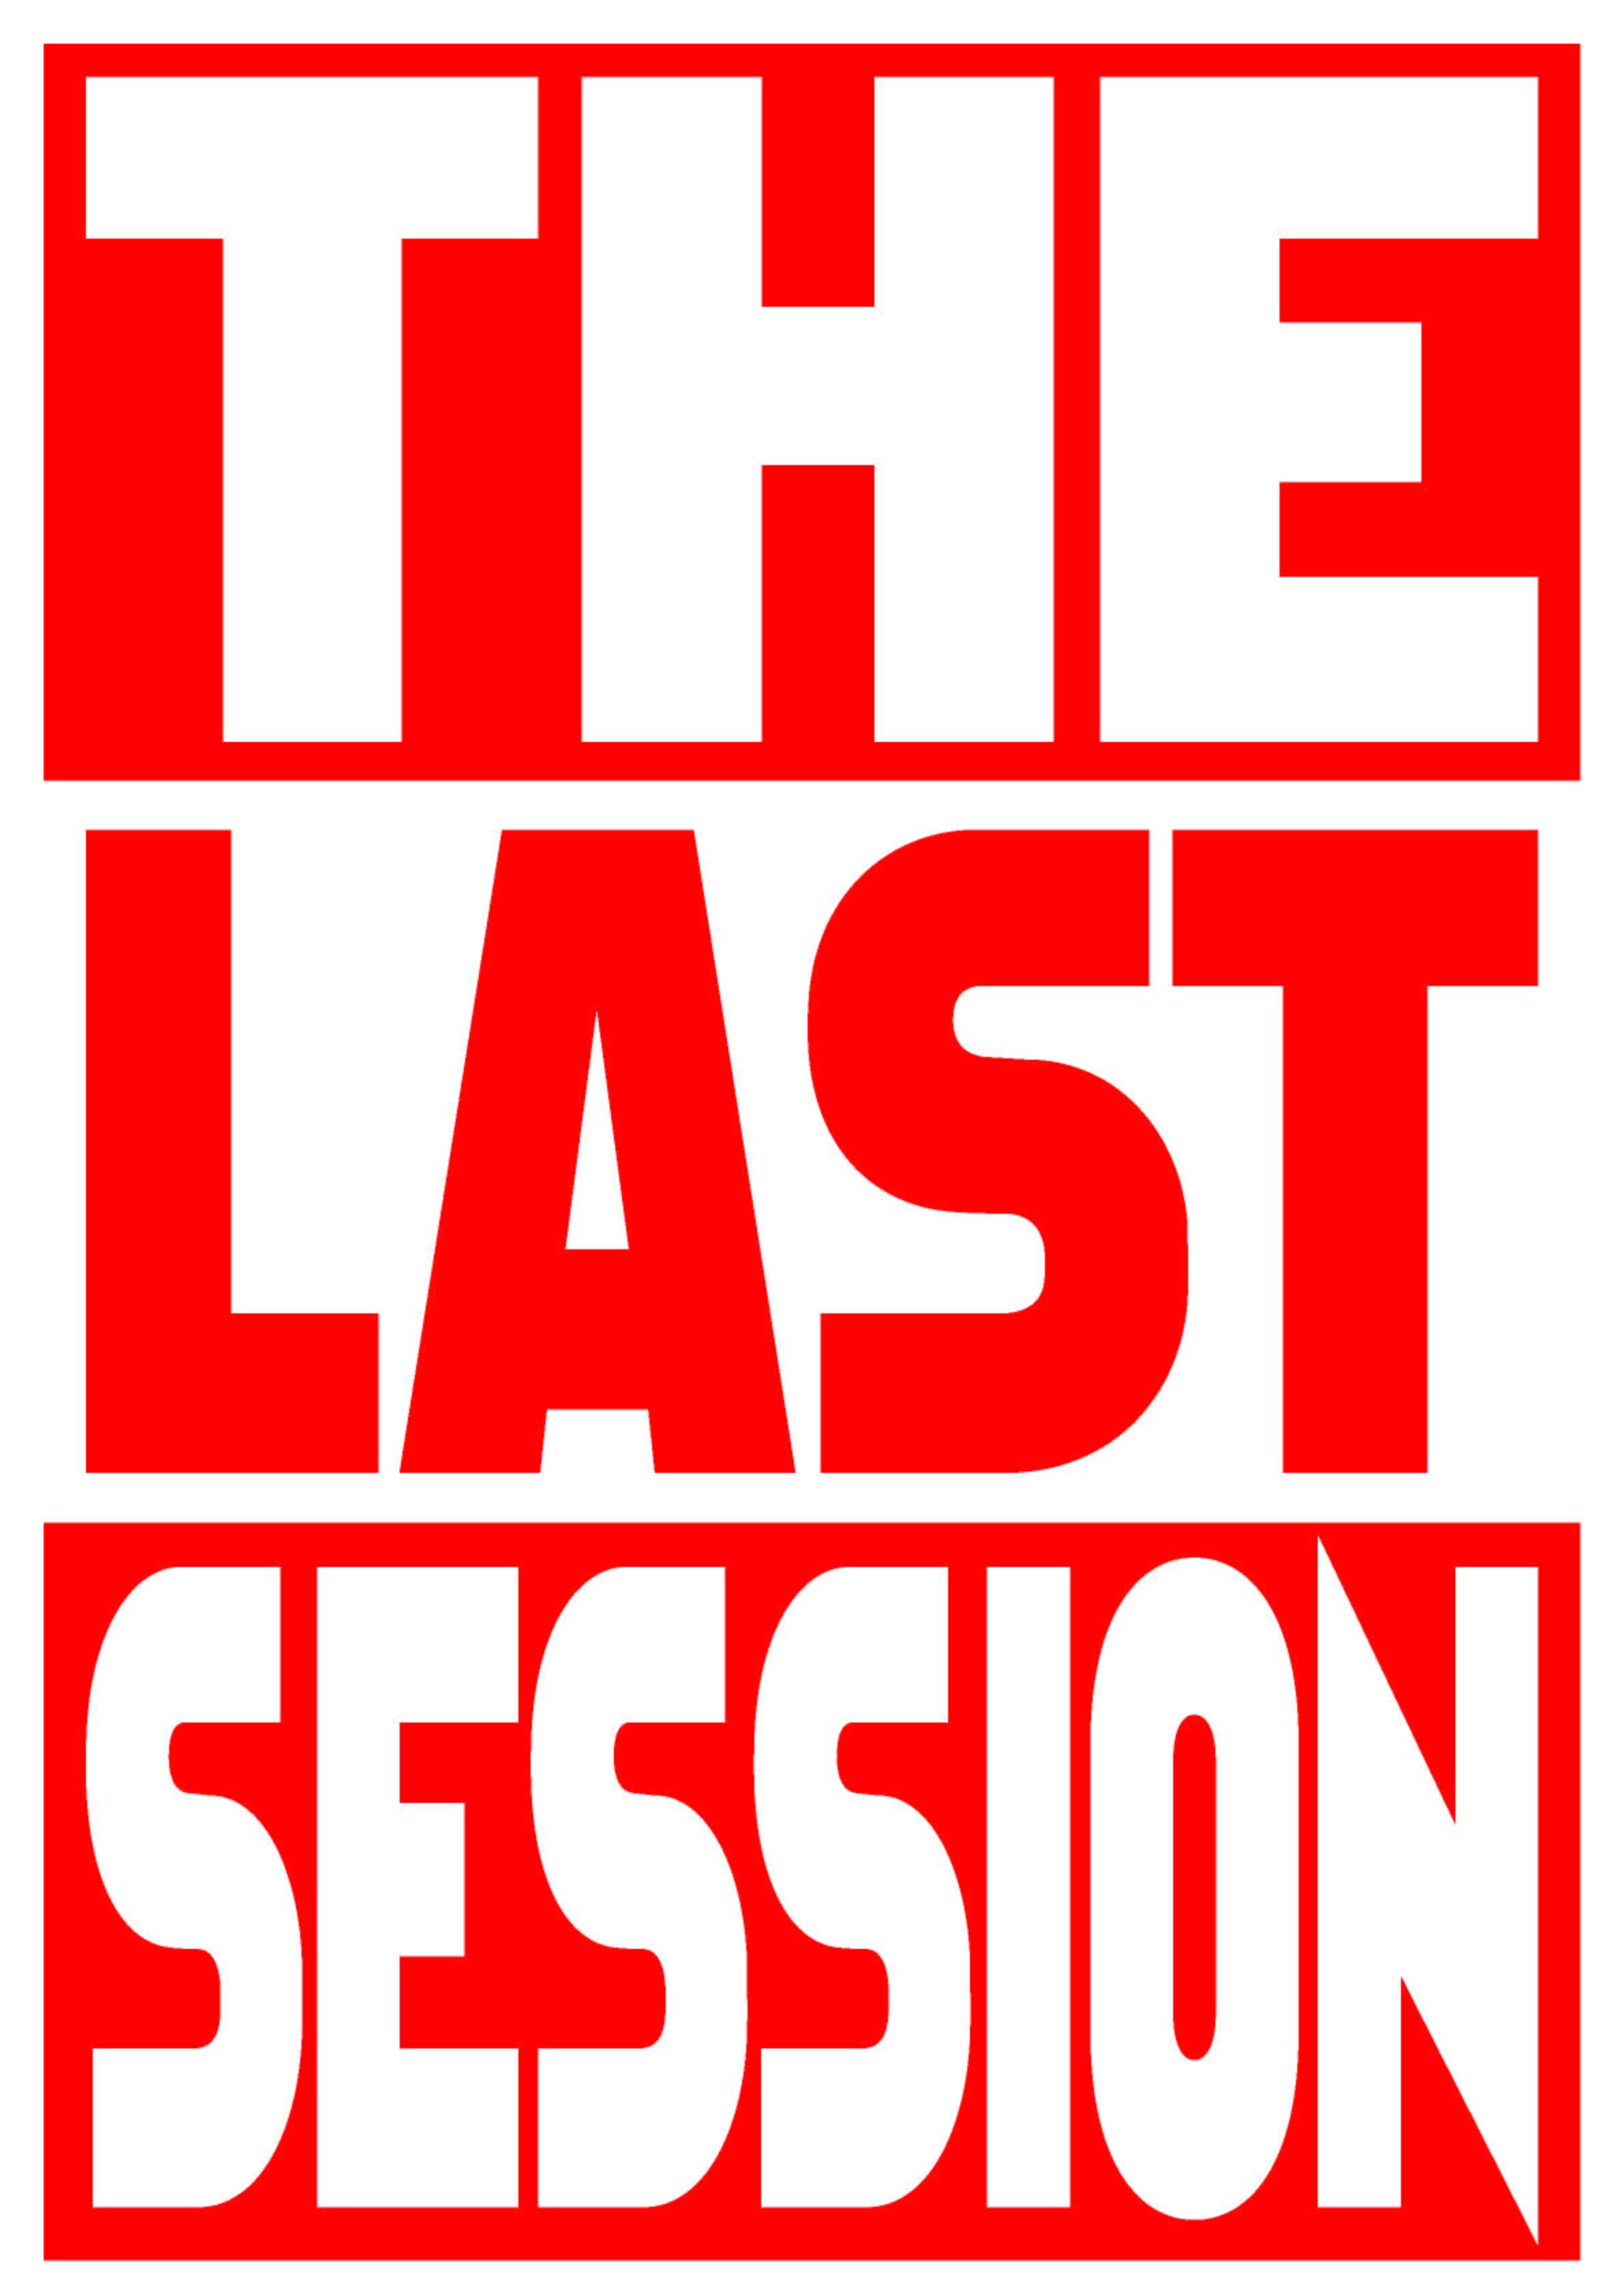 THE LAST SESSION - Mediamatic